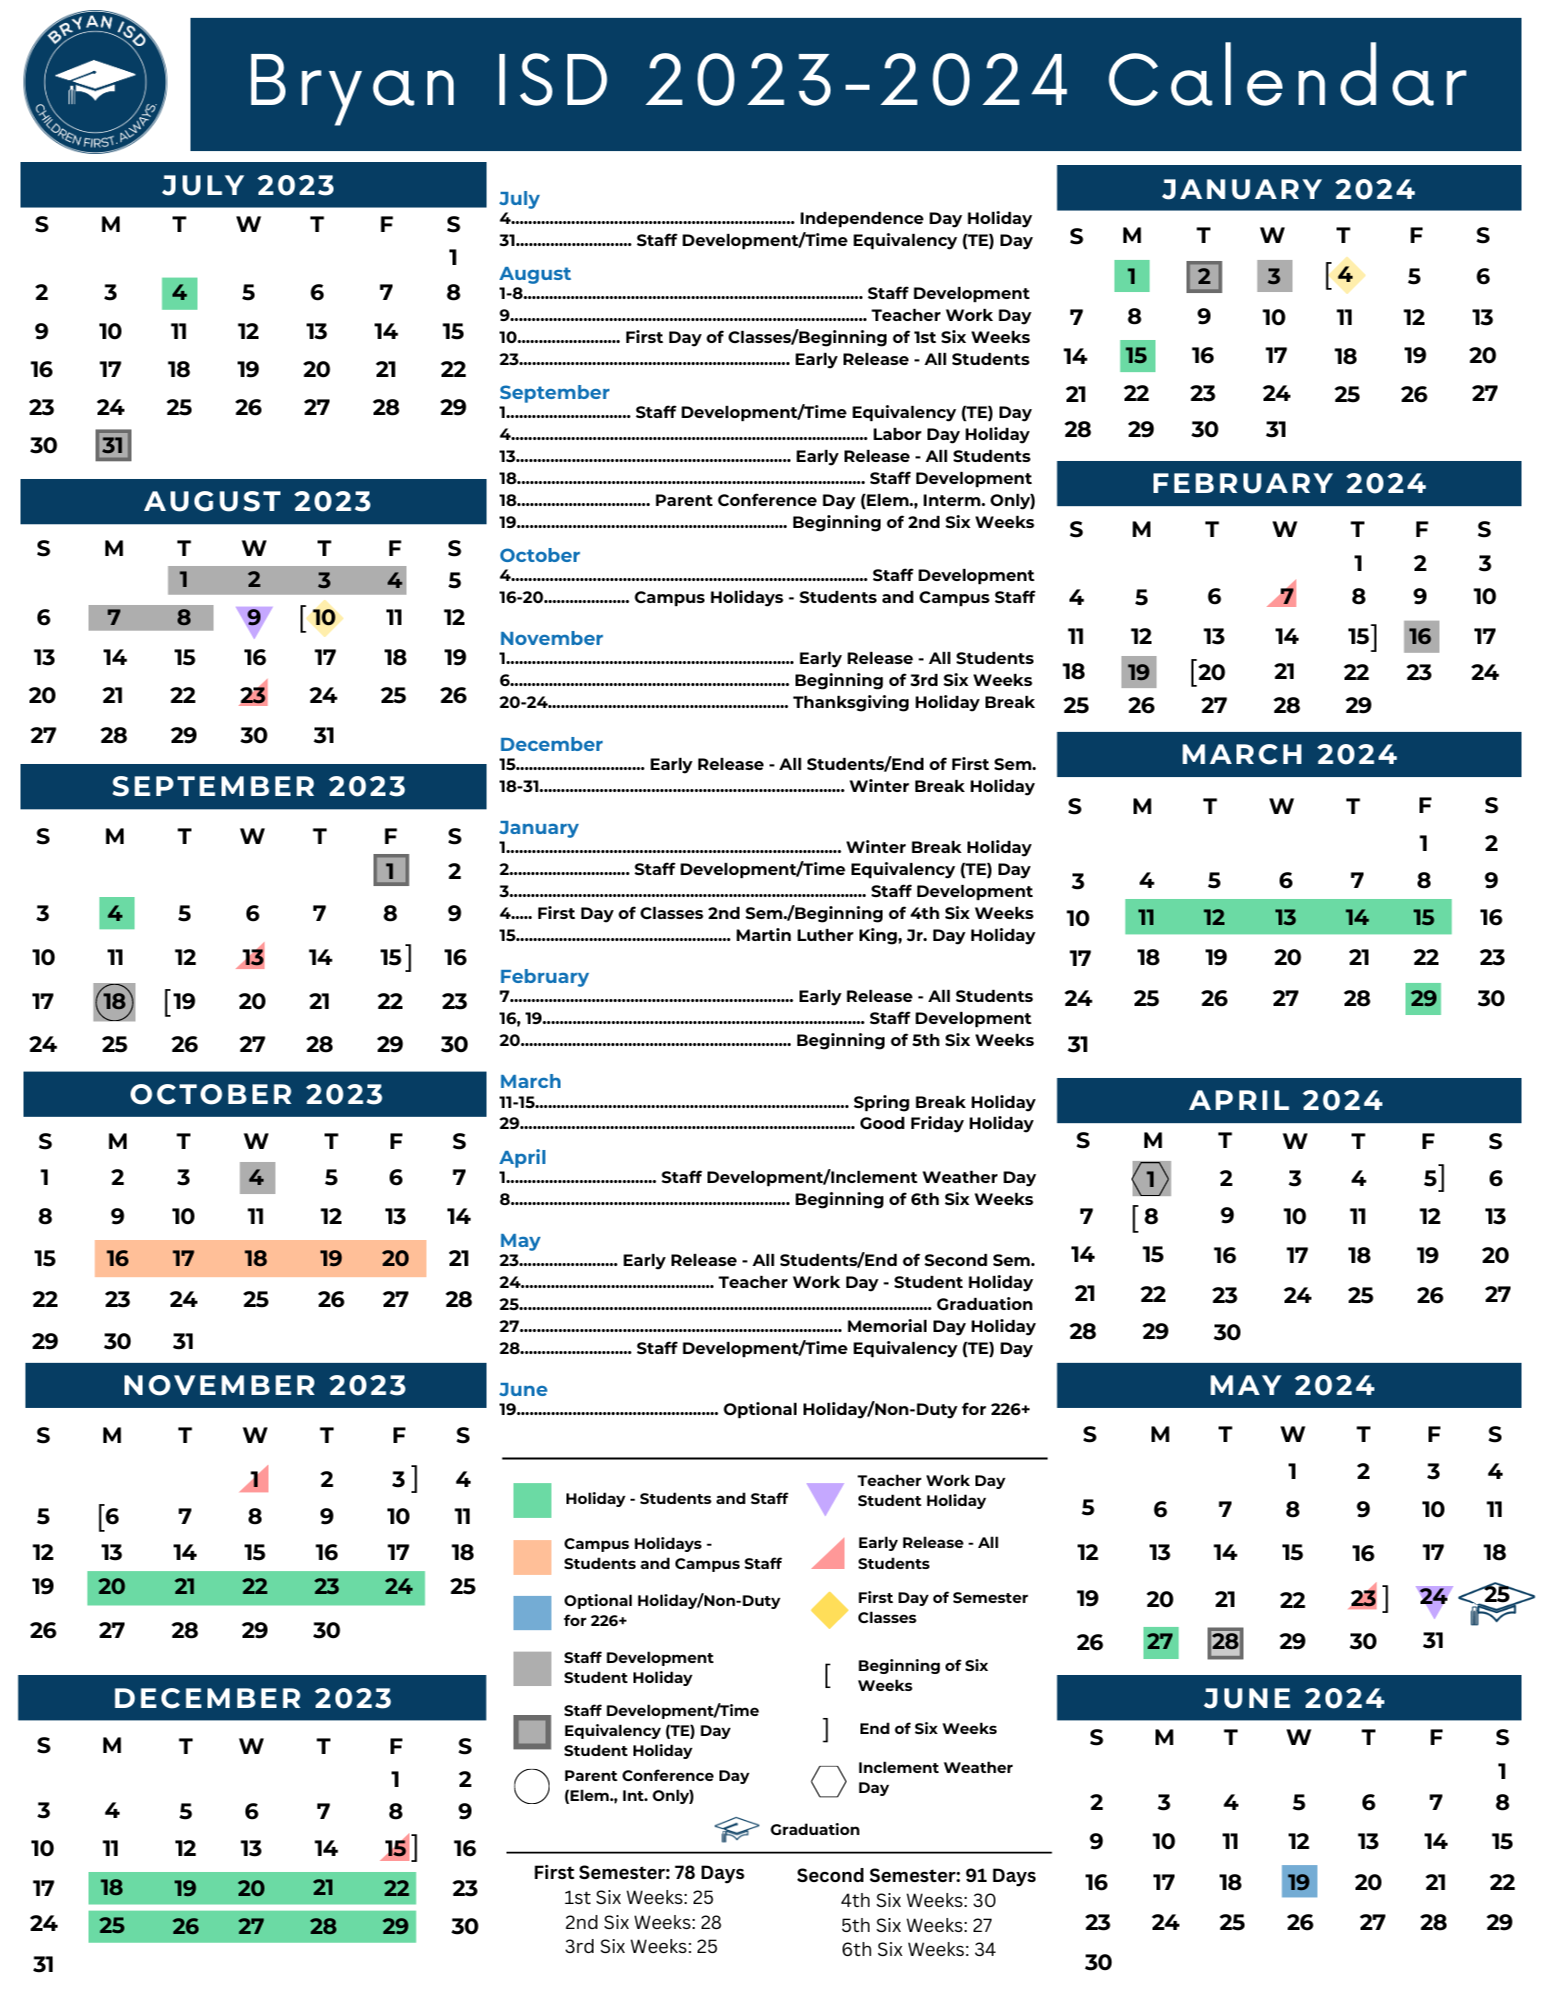 Bryan ISD 2023-2024 Academic Calendar, updated 5.5.23